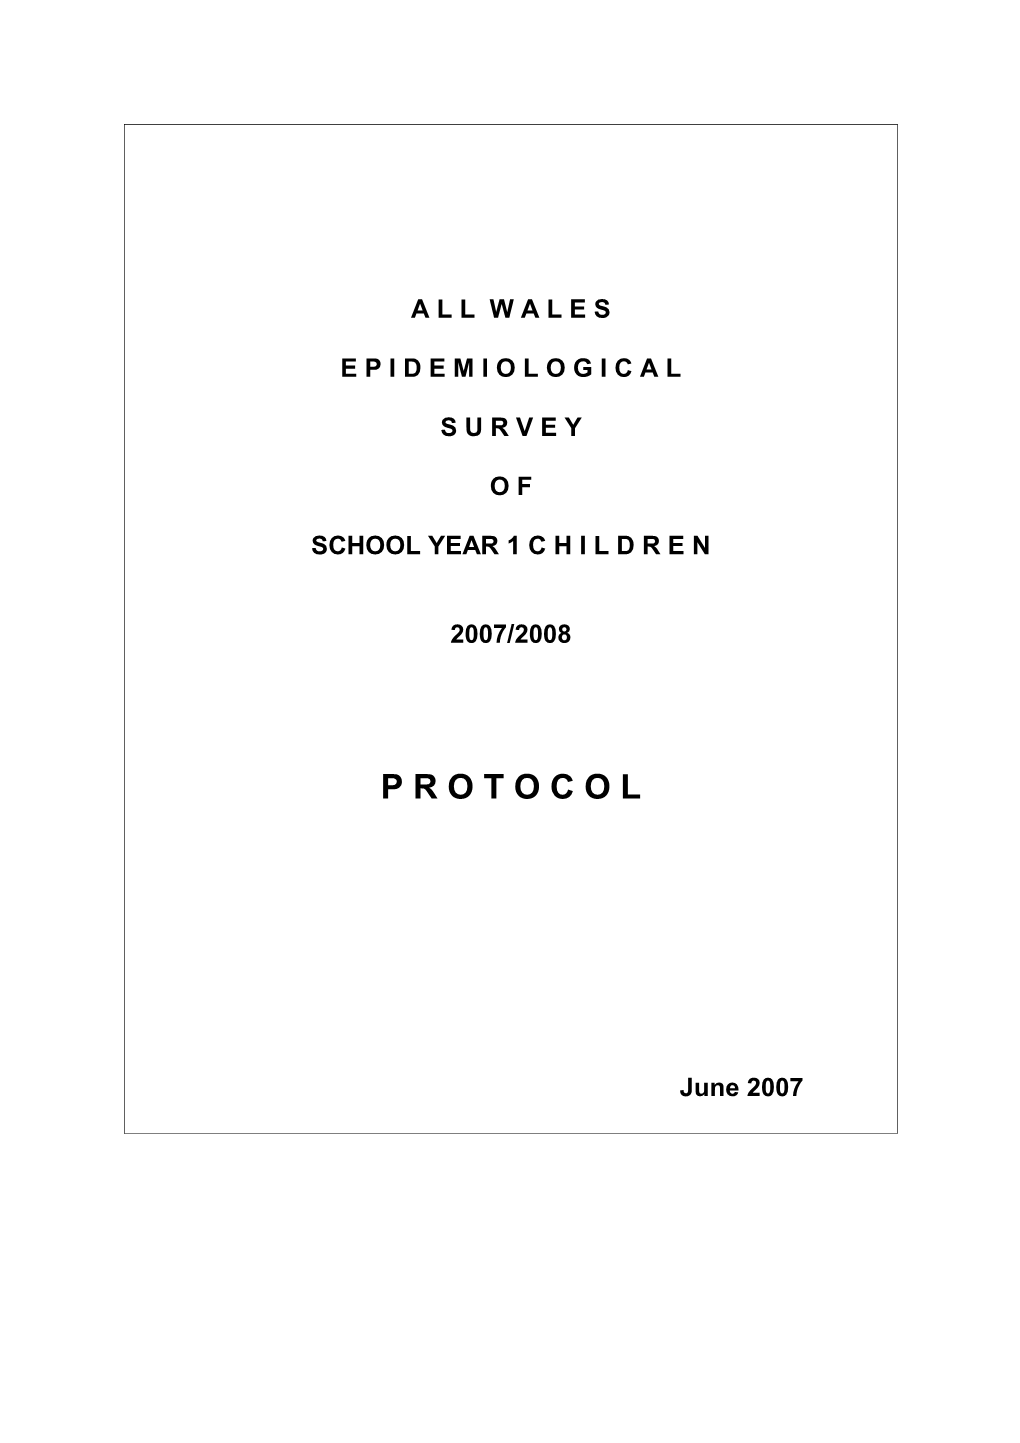 Dental Survey of School Year 1 Children in Wales 2007/2008